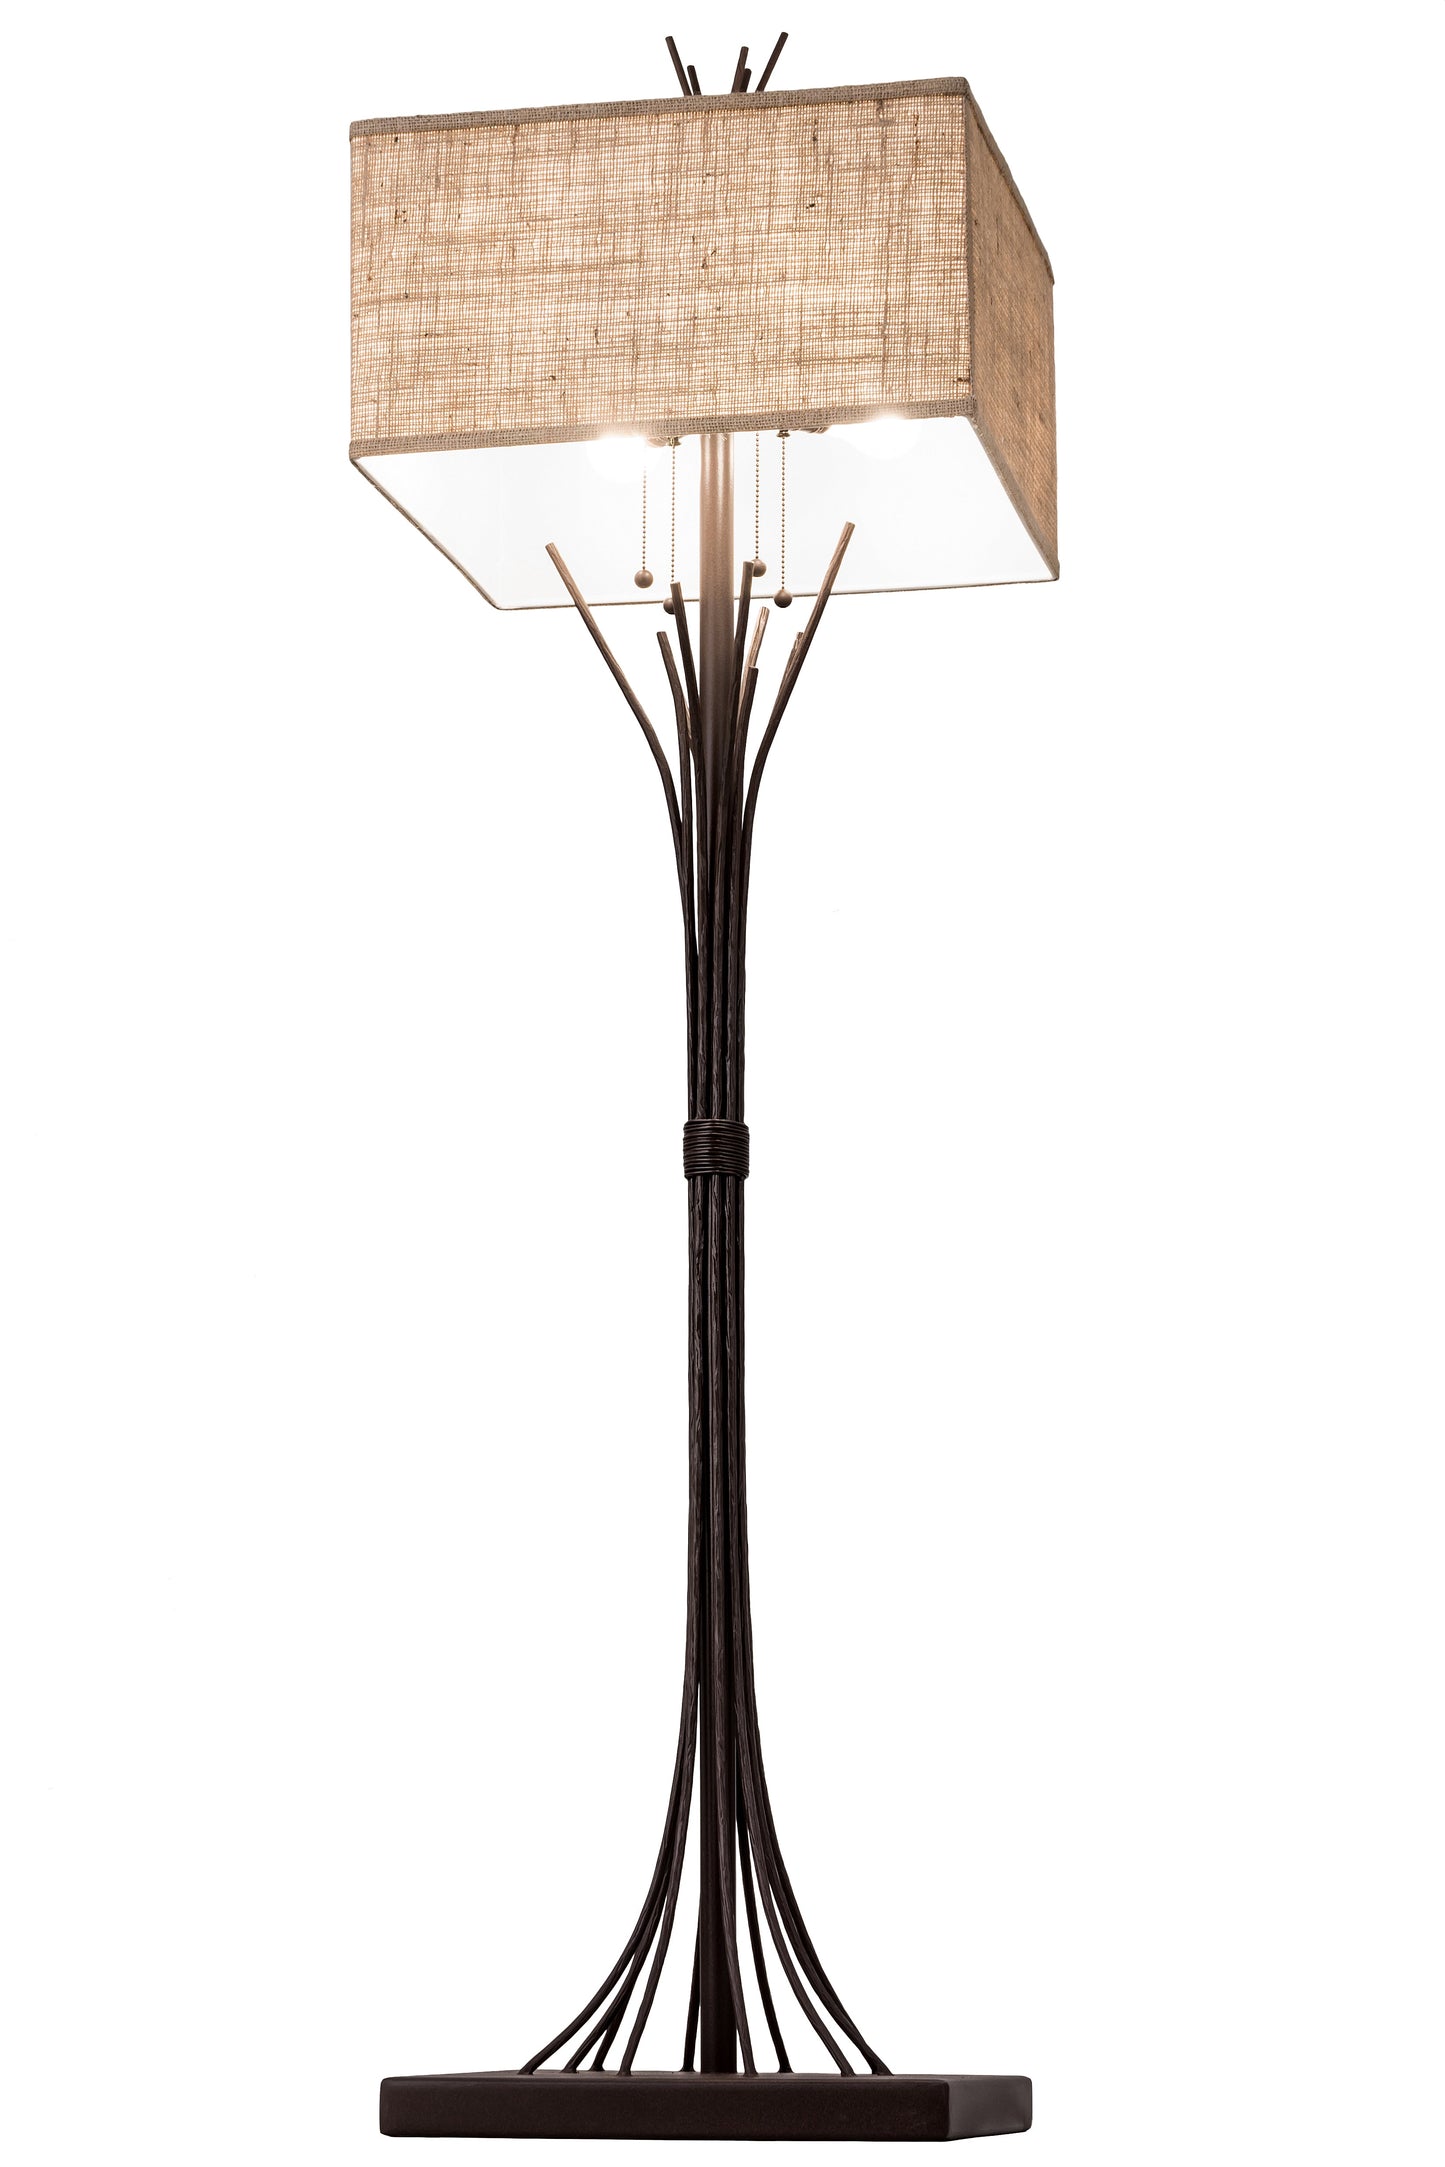 63" Ramus Floor Lamp by 2nd Ave Lighting